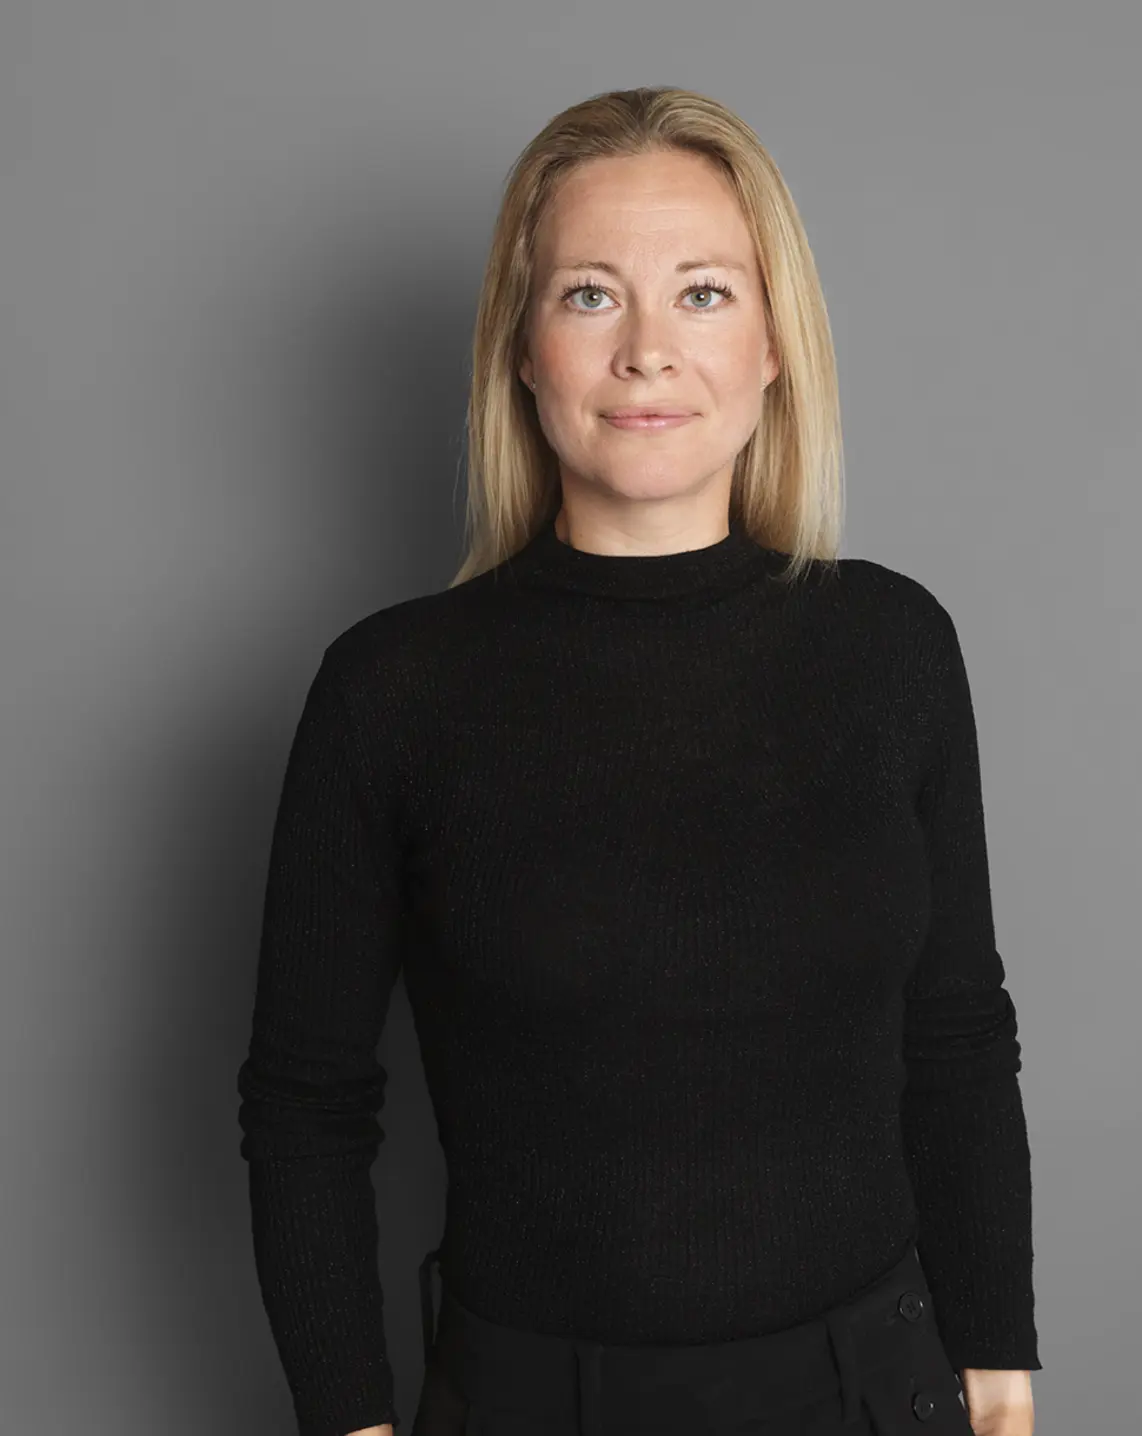 Camilla Søgaard Hudson